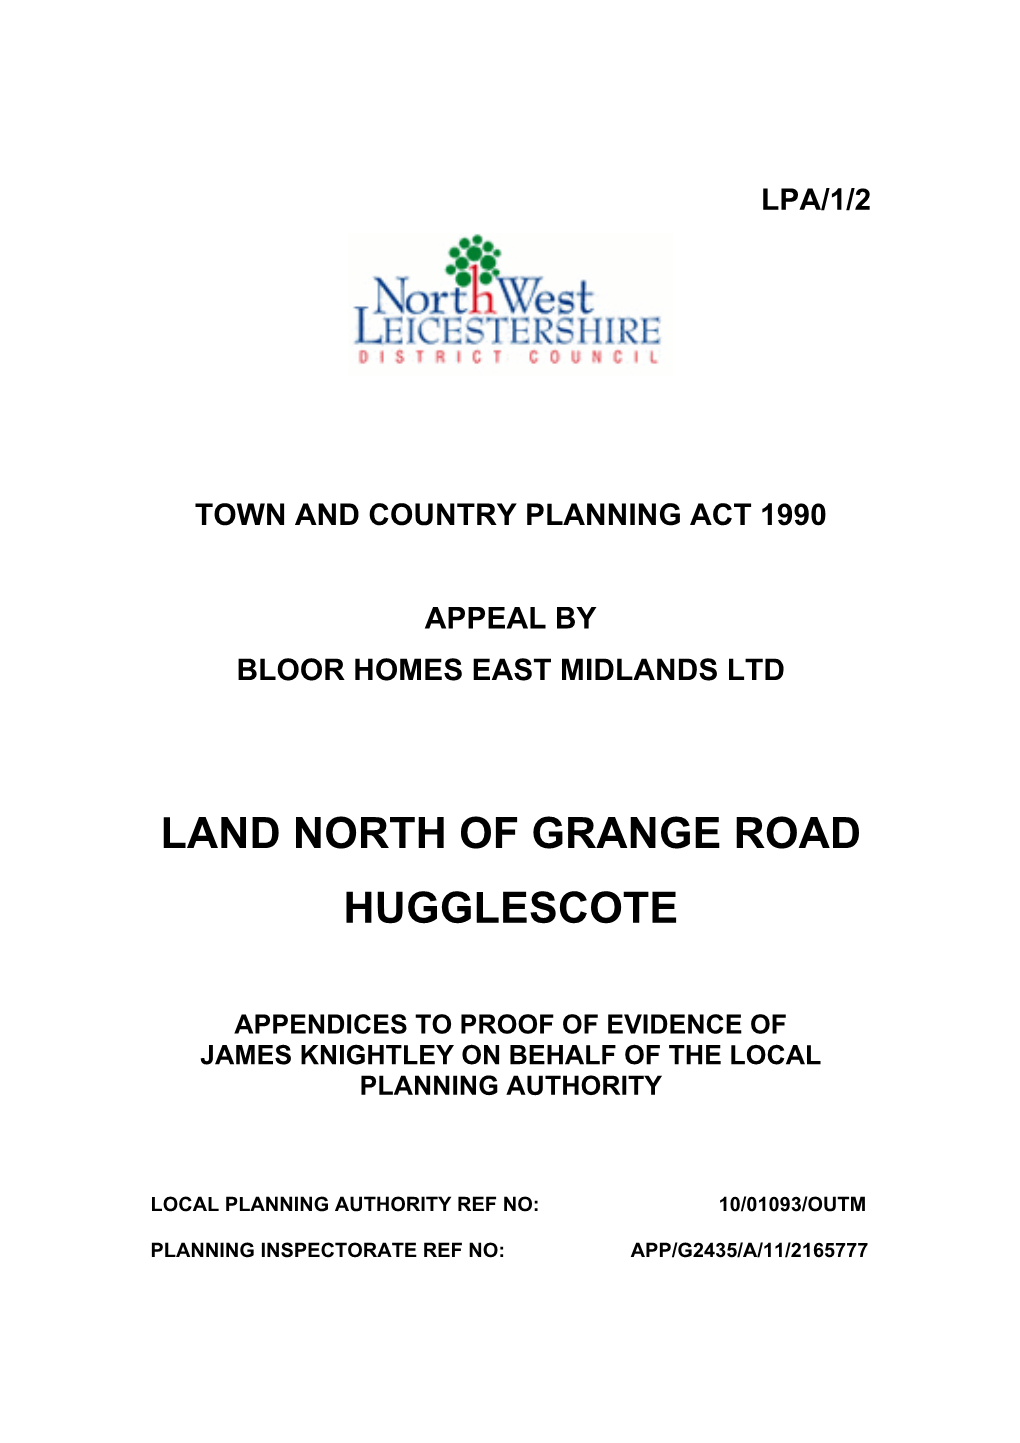 Land North of Grange Road Hugglescote